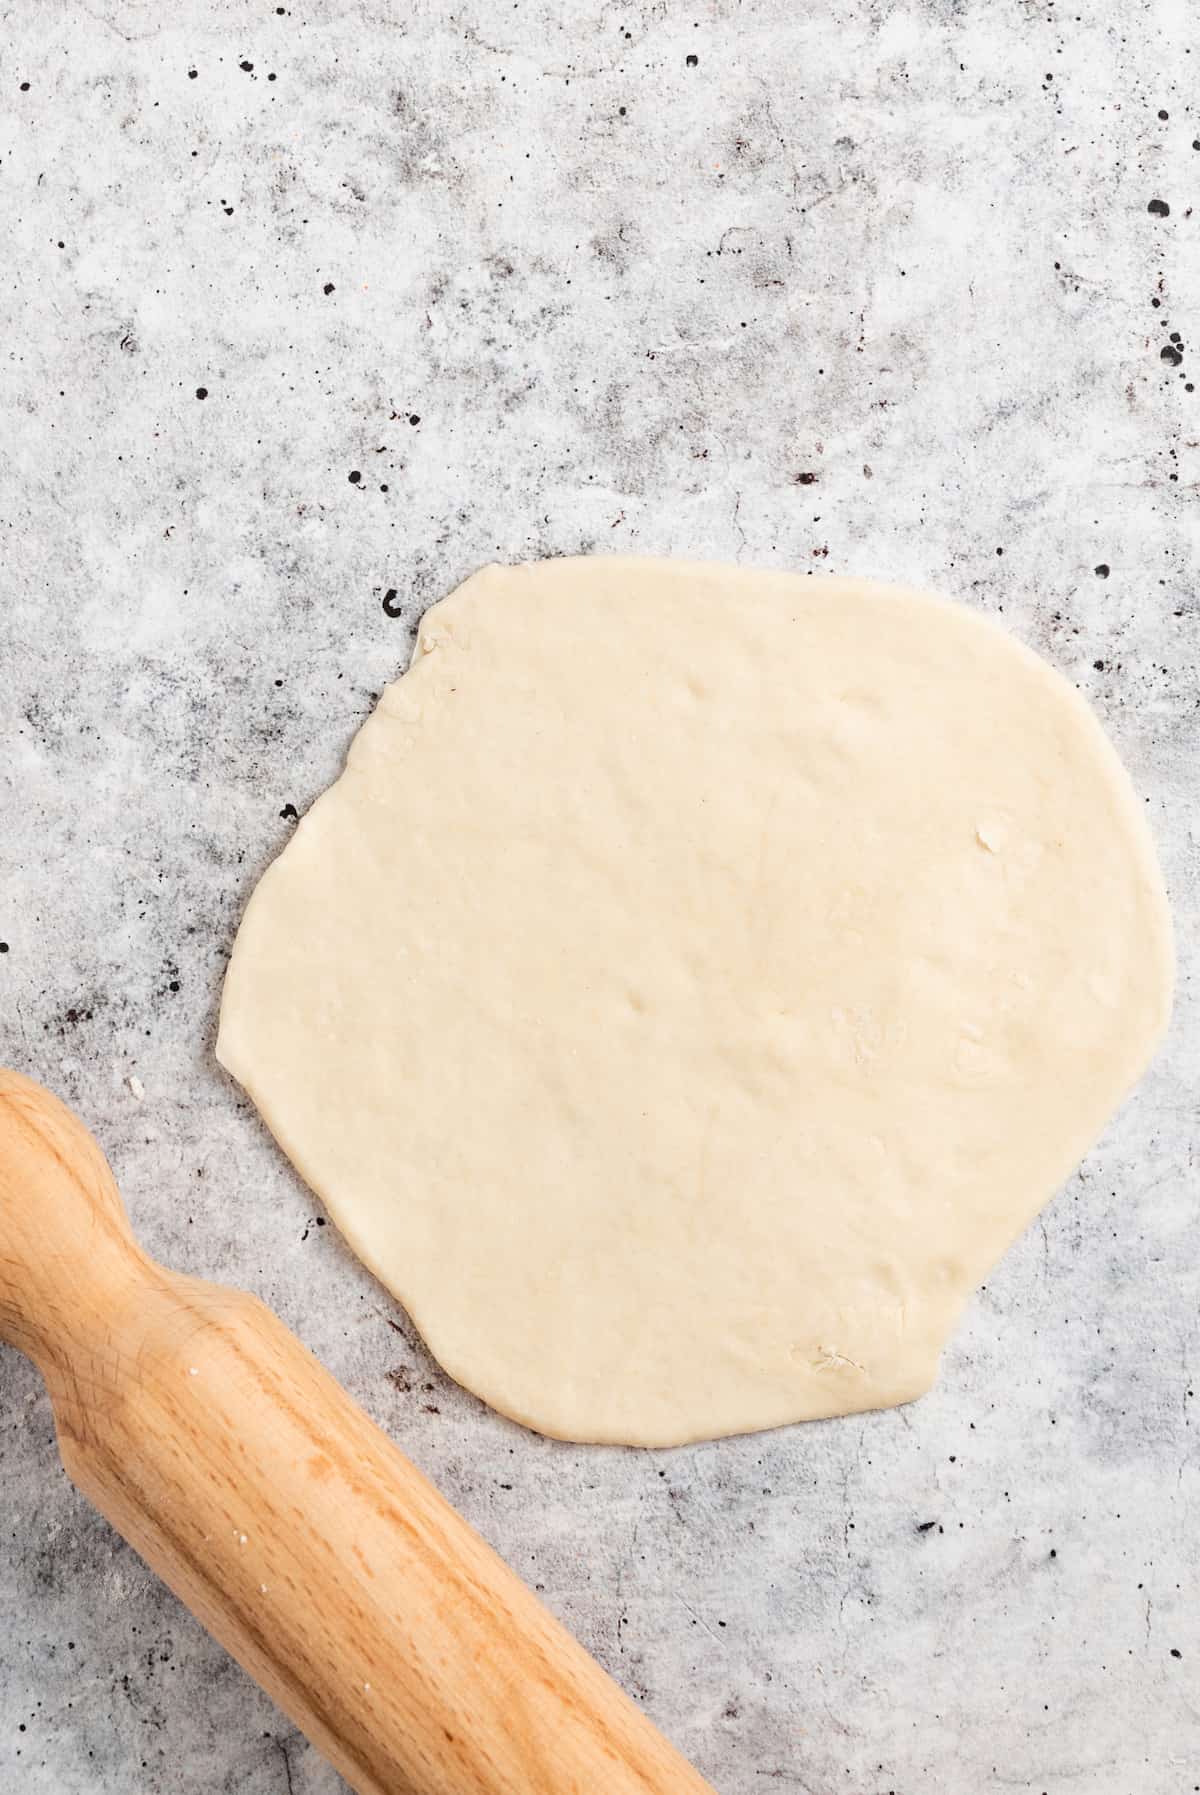 Flattening the dough.